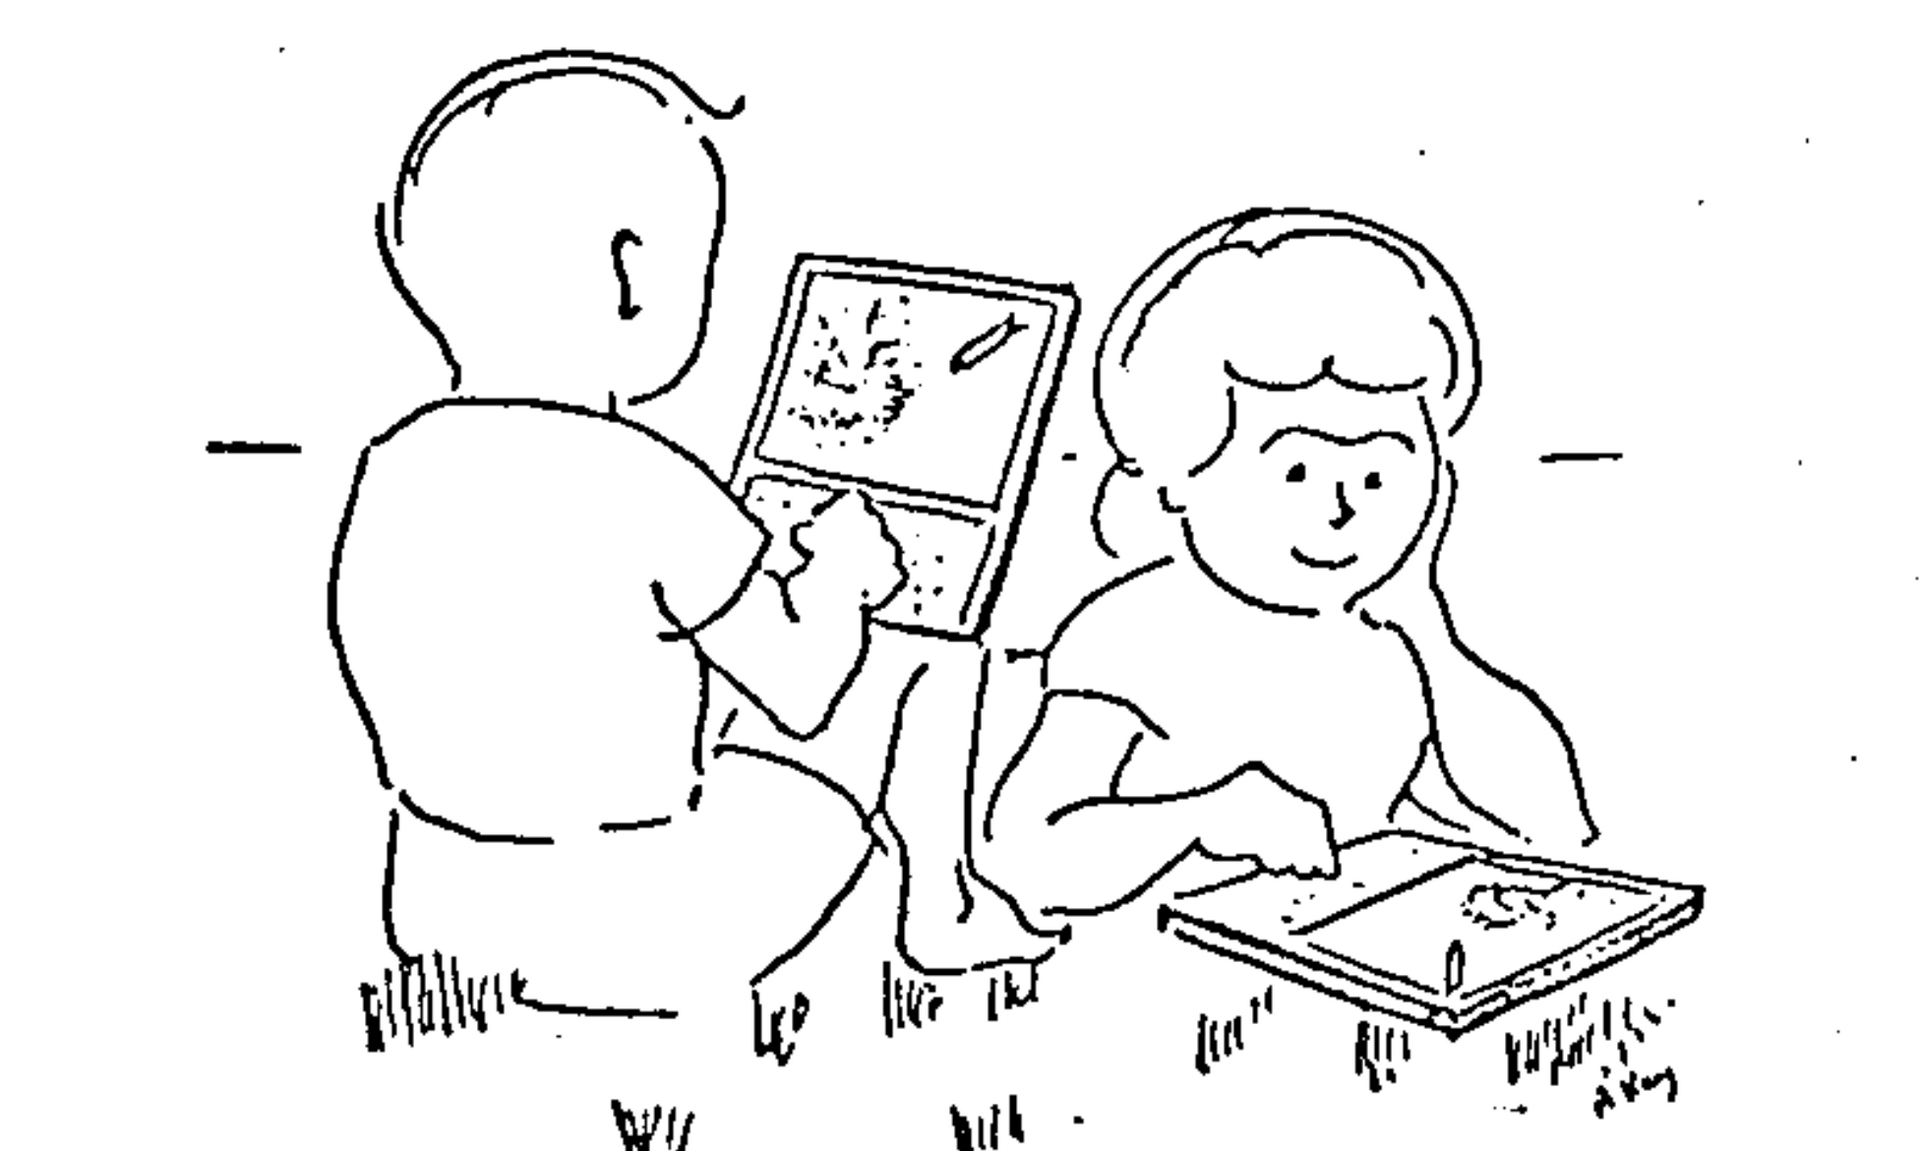 alan kay 论文里两个孩子坐在草地上玩Dynabooks